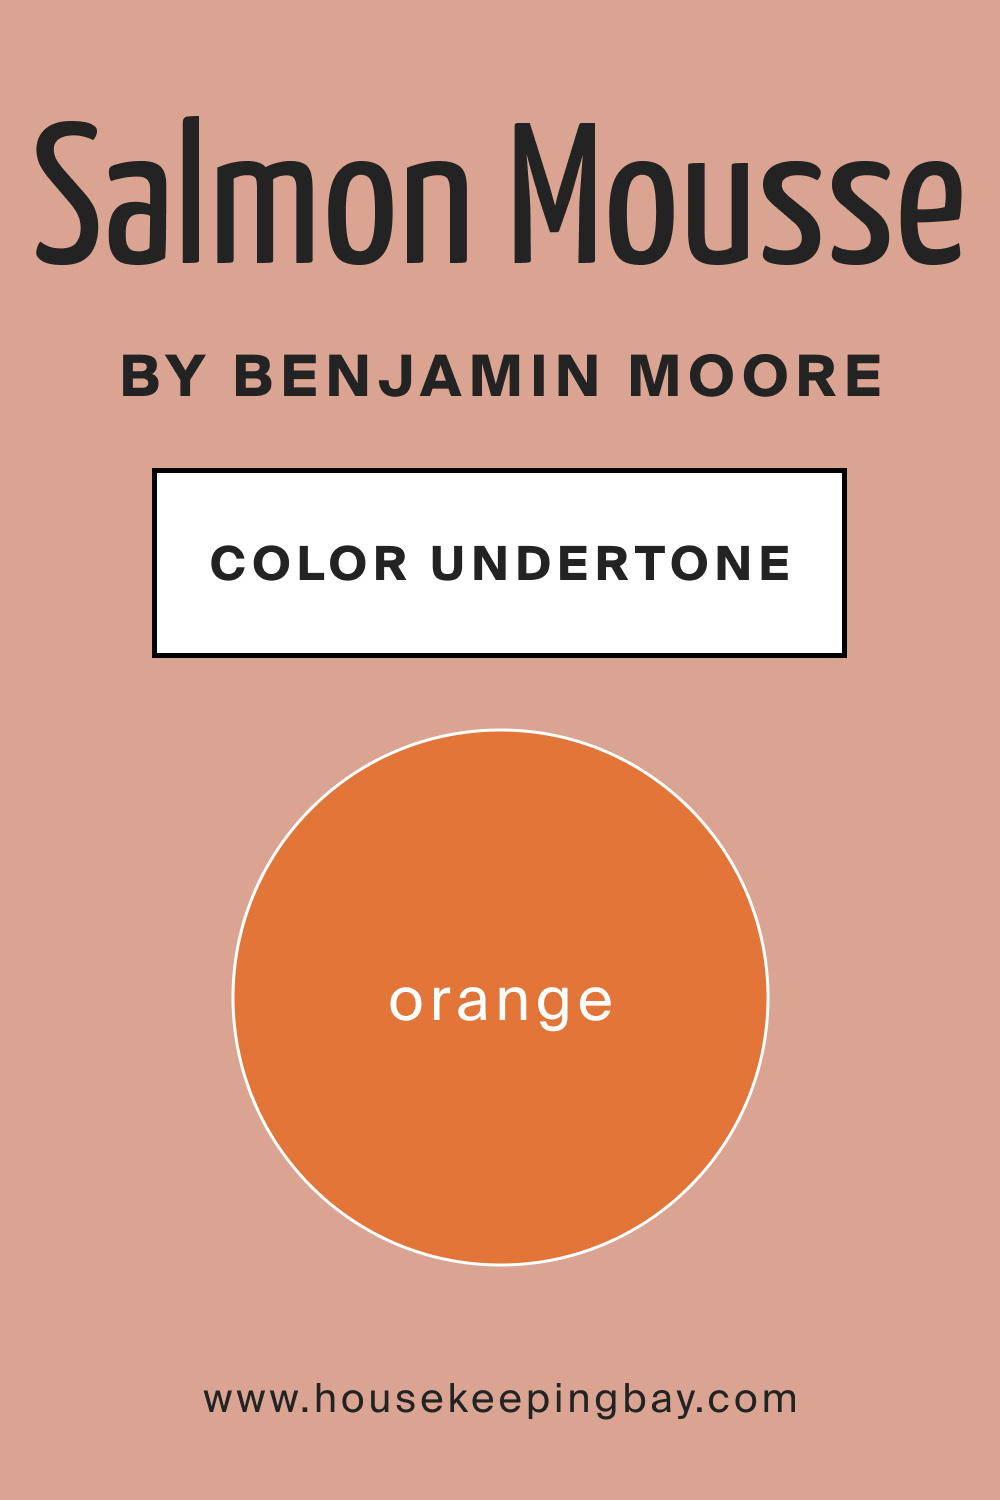 BM Salmon Mousse 046 by Benjamin Moore. Main Undertone